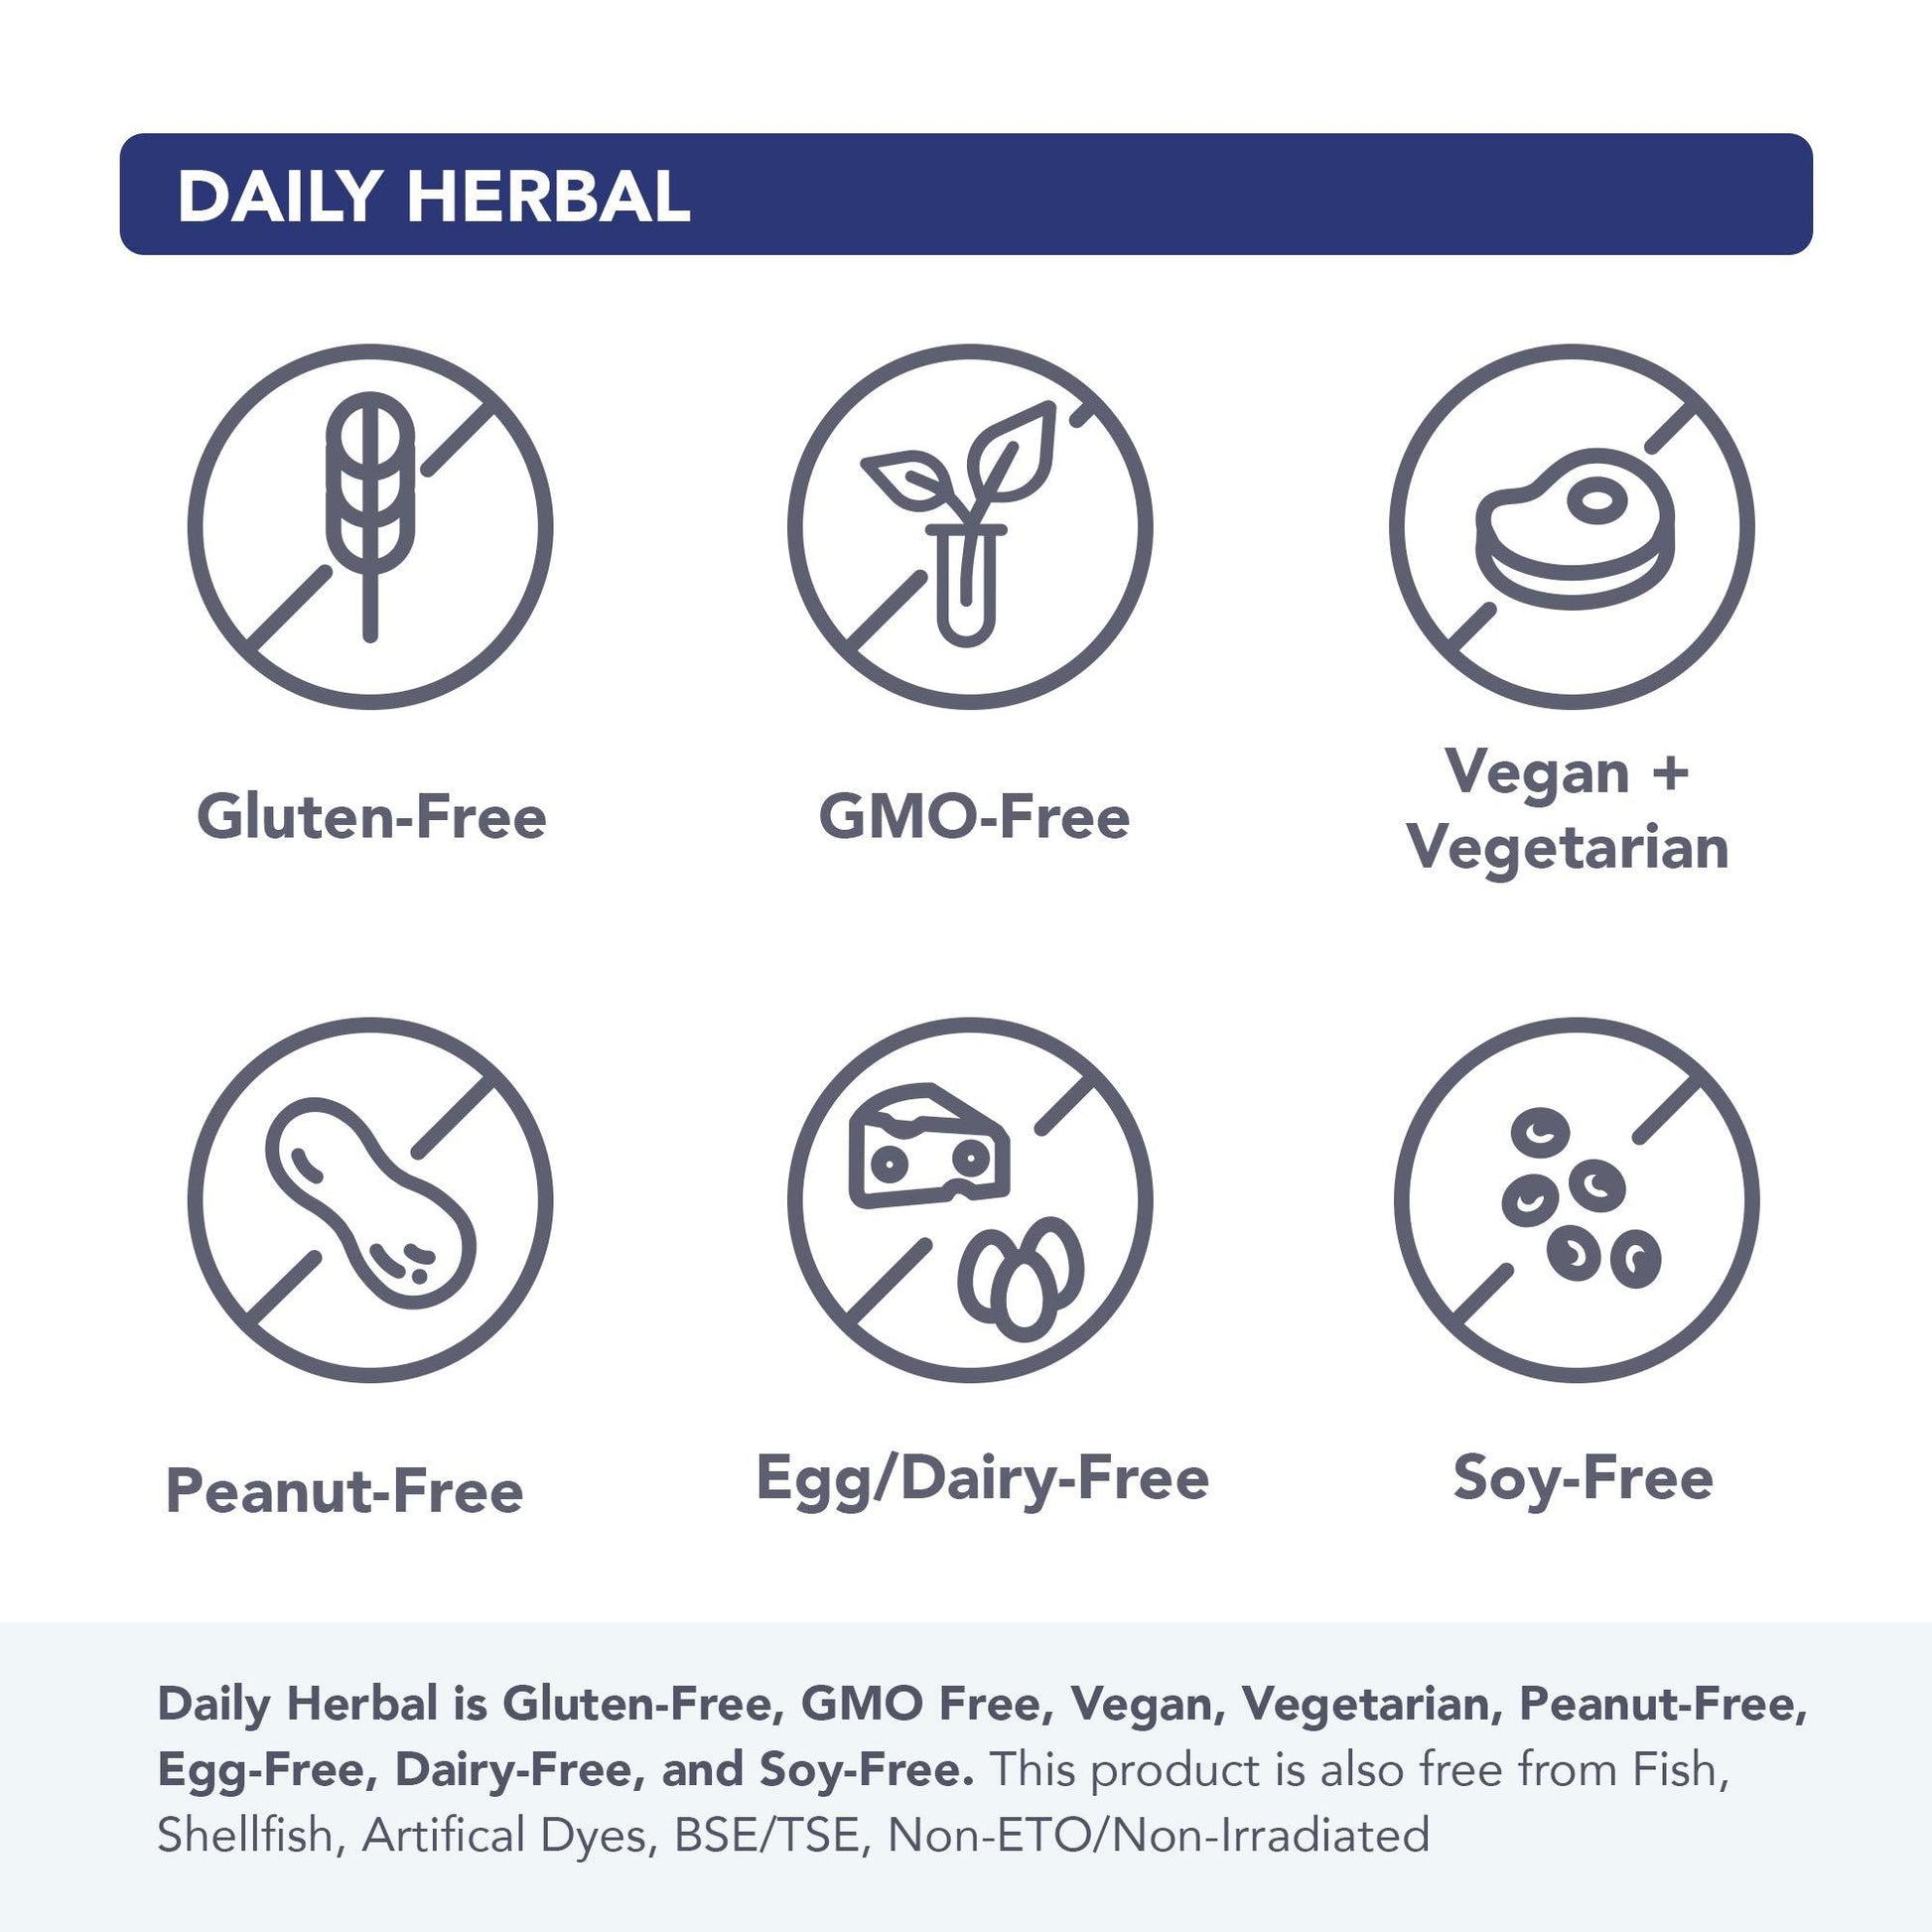 Daily Herbal - Vital Plan